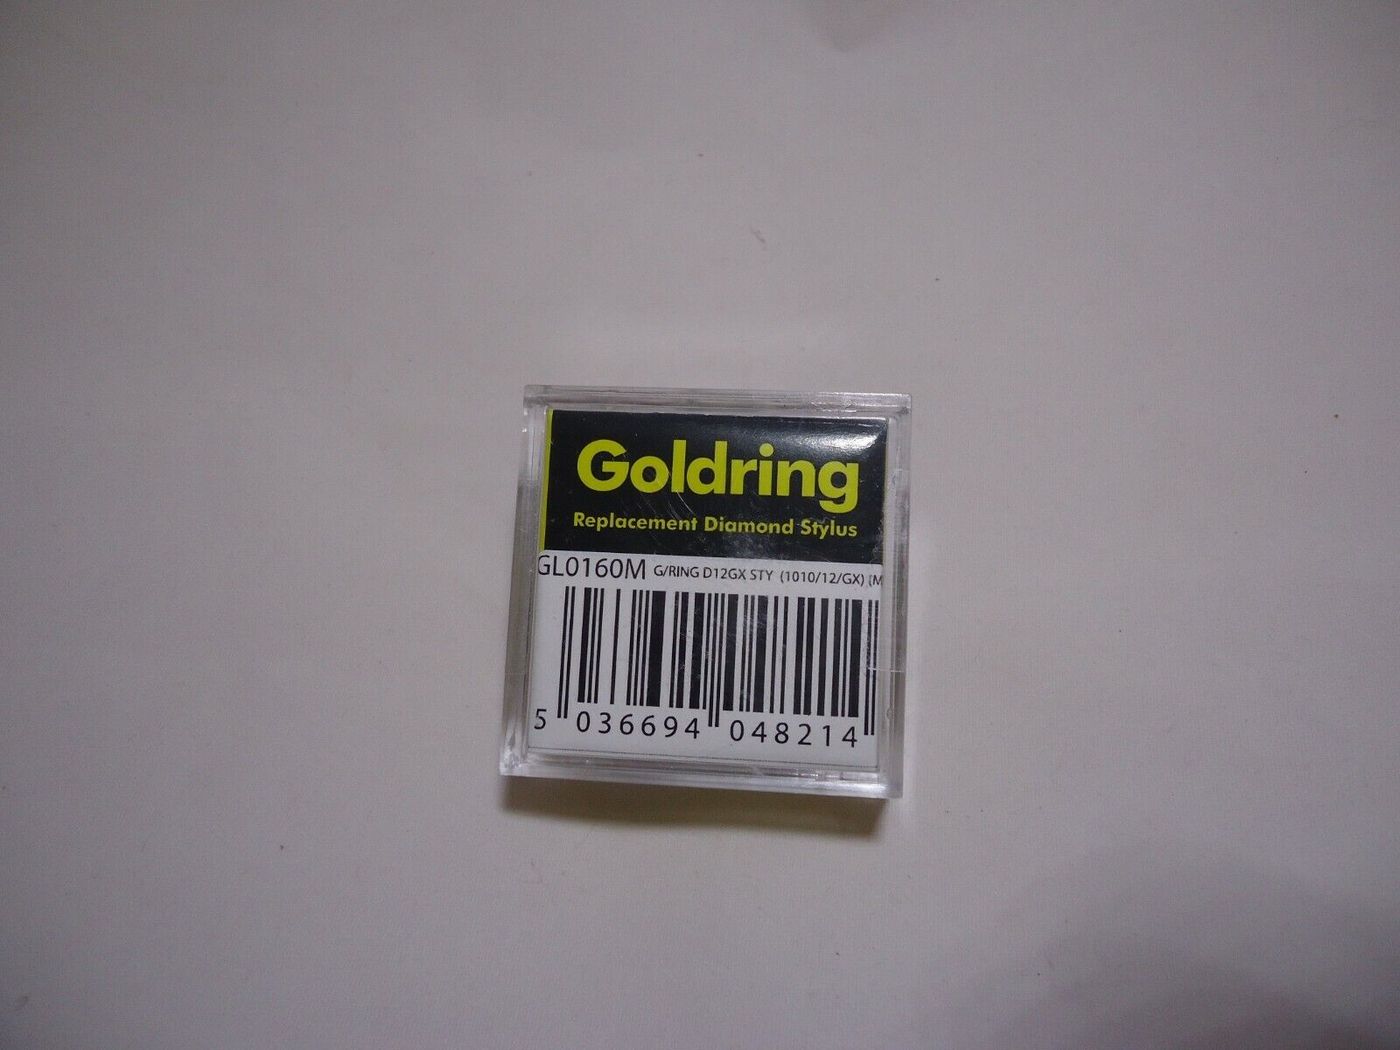 Стилус Goldring D12GX STYLUS (1010/12/GX)